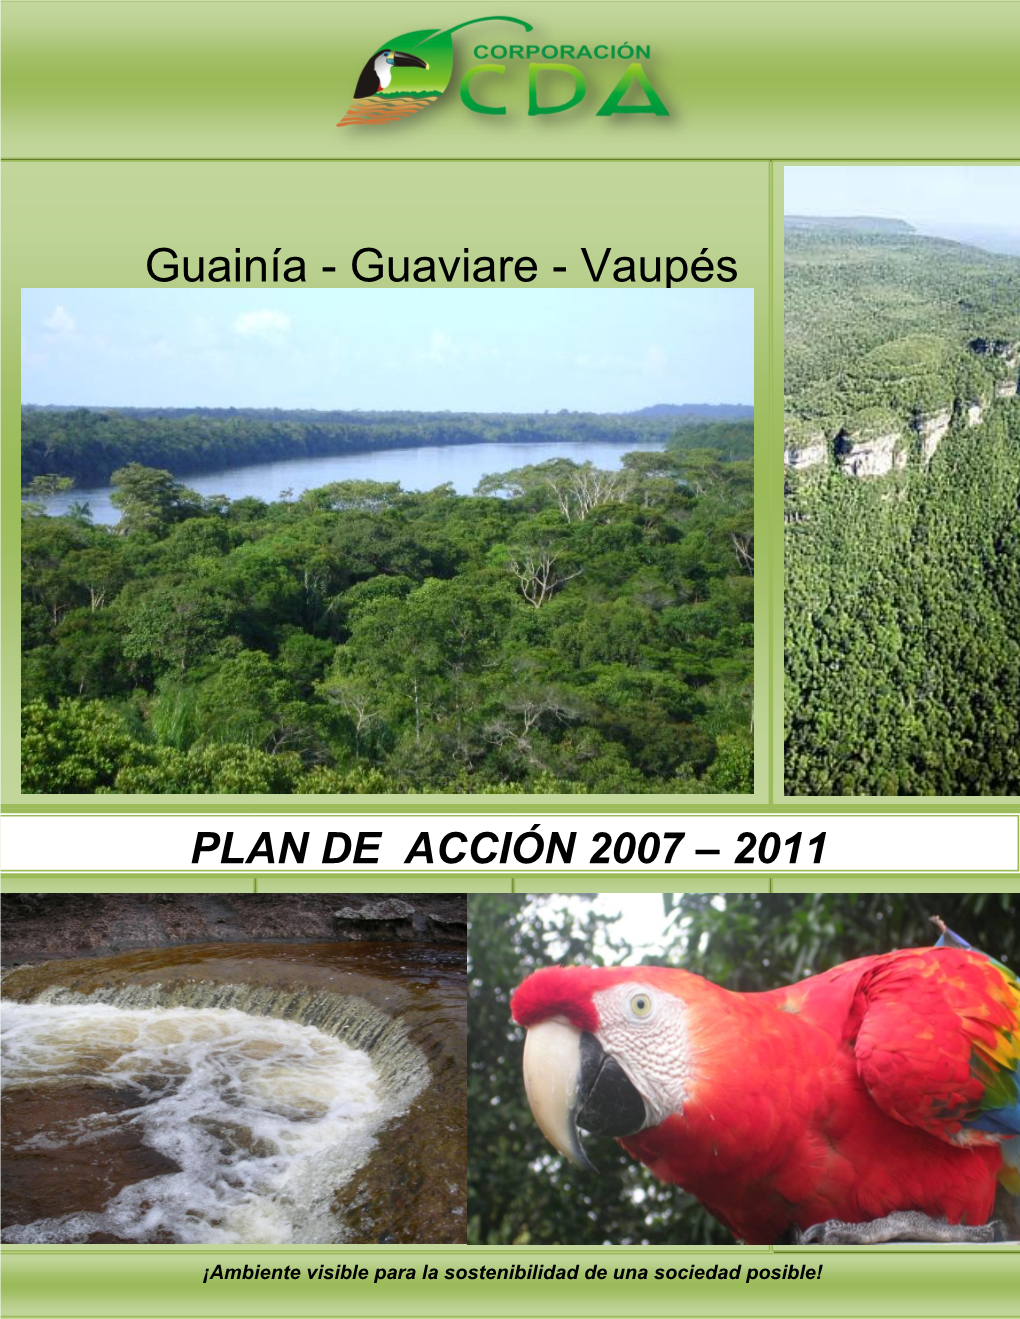 Guainía - Guaviare - Vaupés